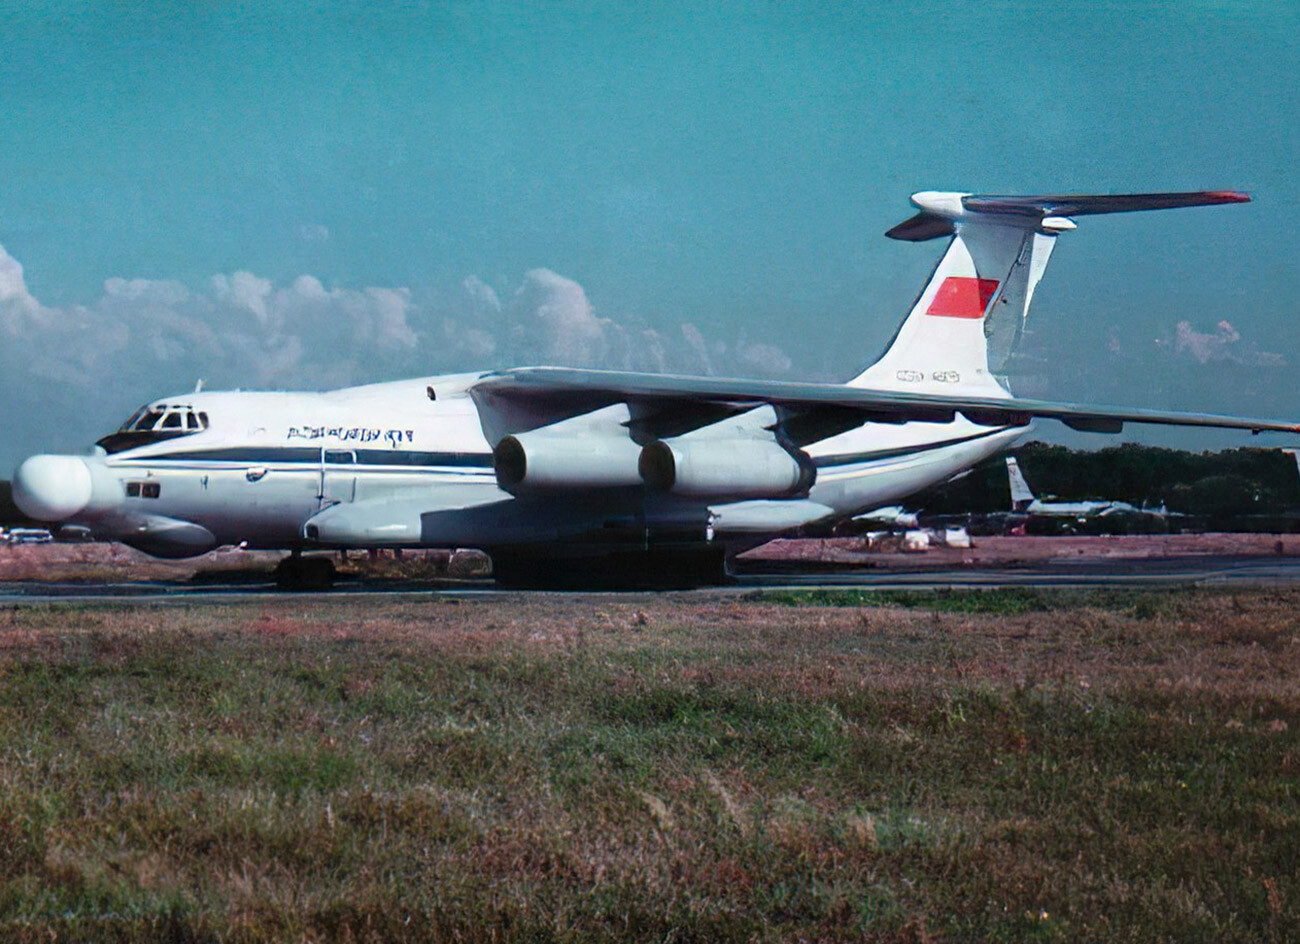 A-60 - nosilec laserskega orožja na osnovi Il-76